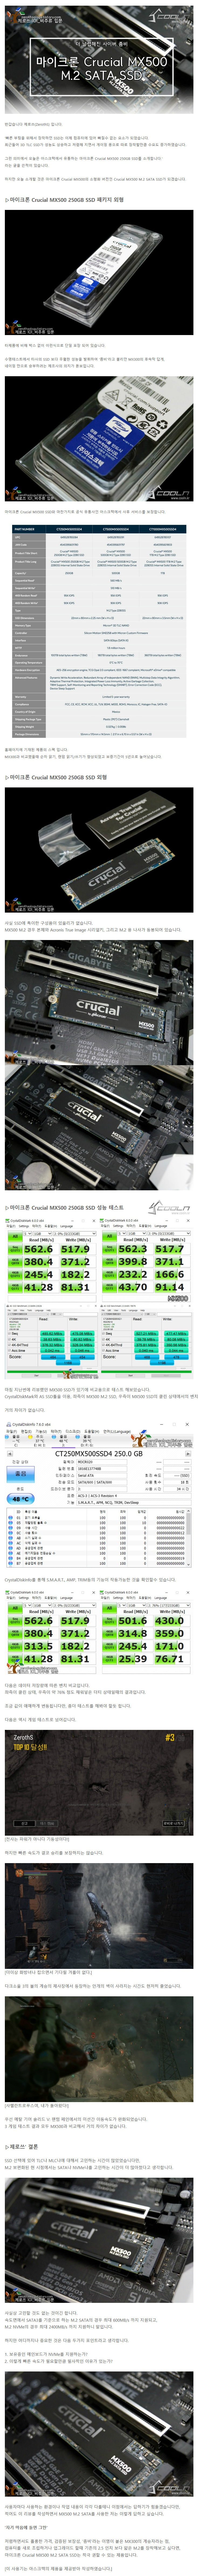 Screenshot-2018-6-5 더 날렵해진 사이버 좀비, 마이크론 Crucial MX500 M 2 SATA SSD.jpg